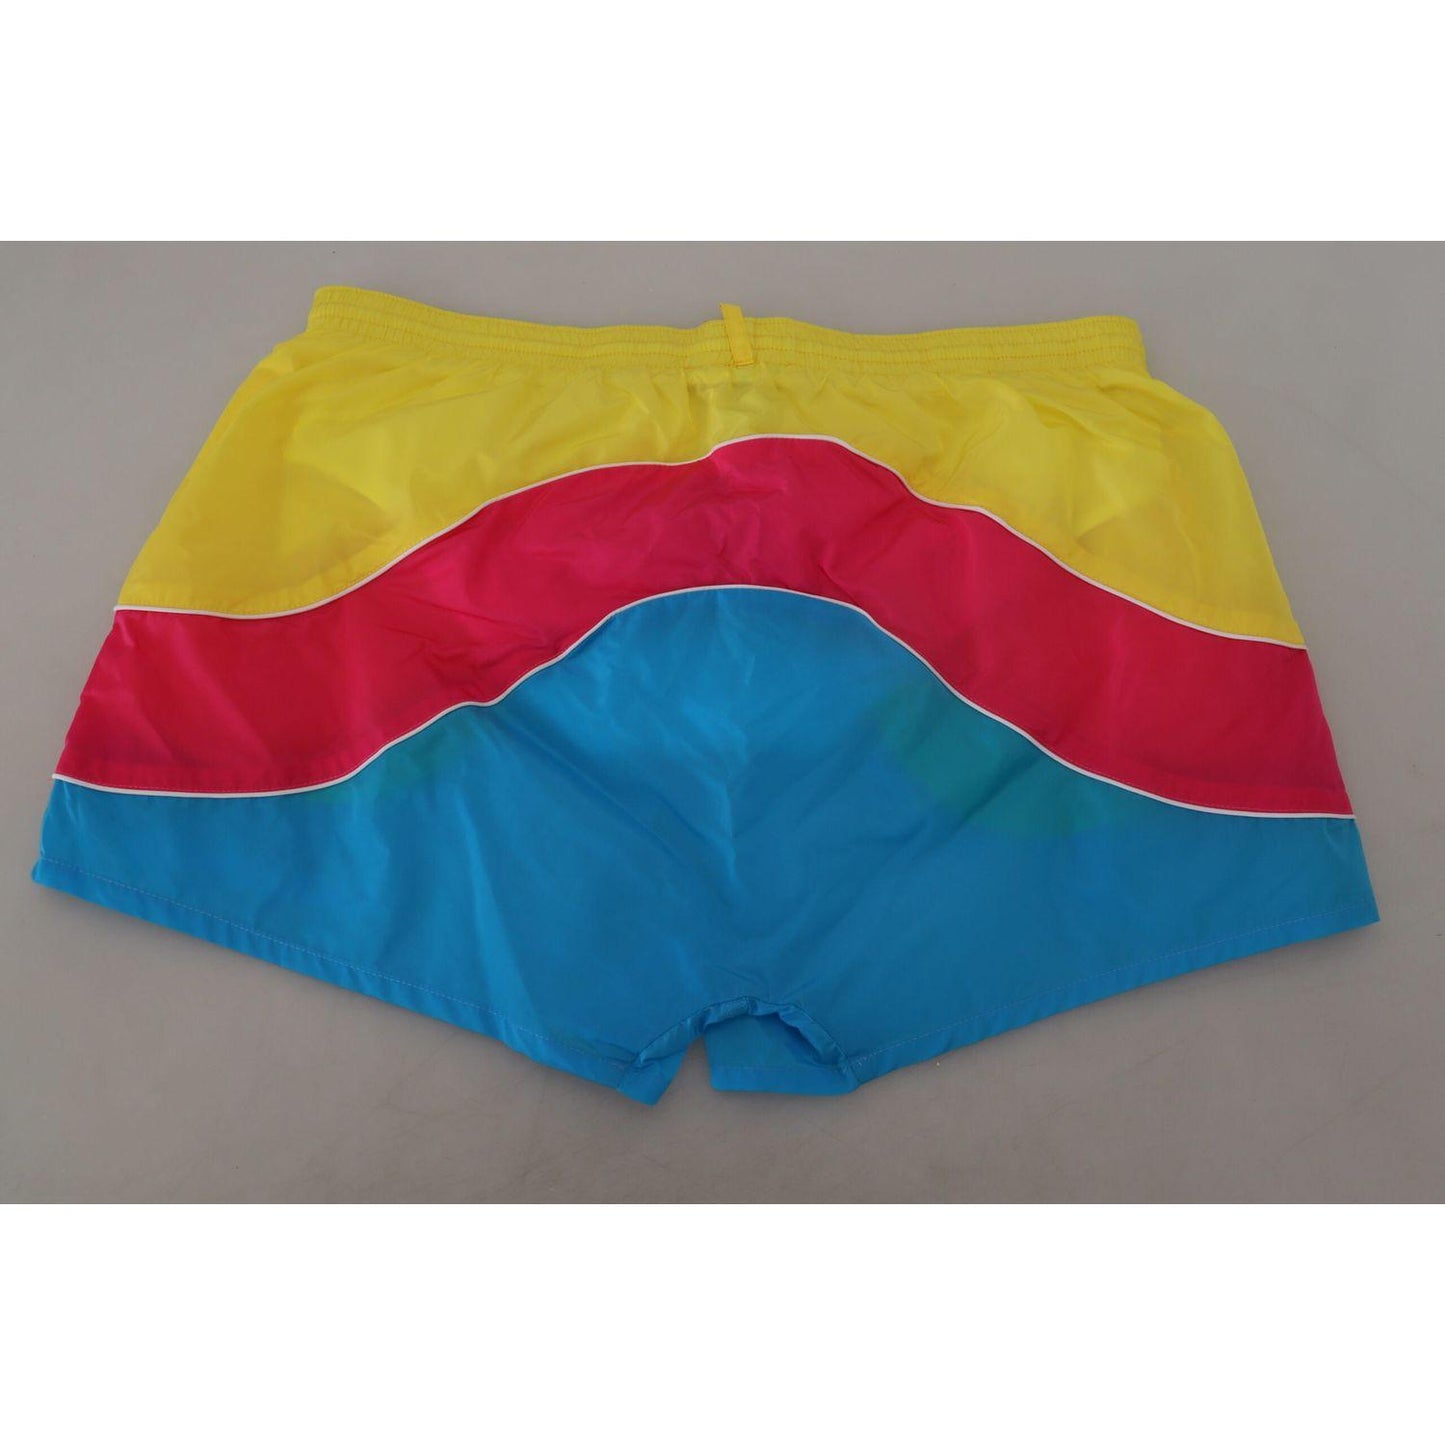 Dsquared² Exclusive Multicolor Swim Shorts Boxer multicolor-logo-print-men-beachwear-shorts-swimwear